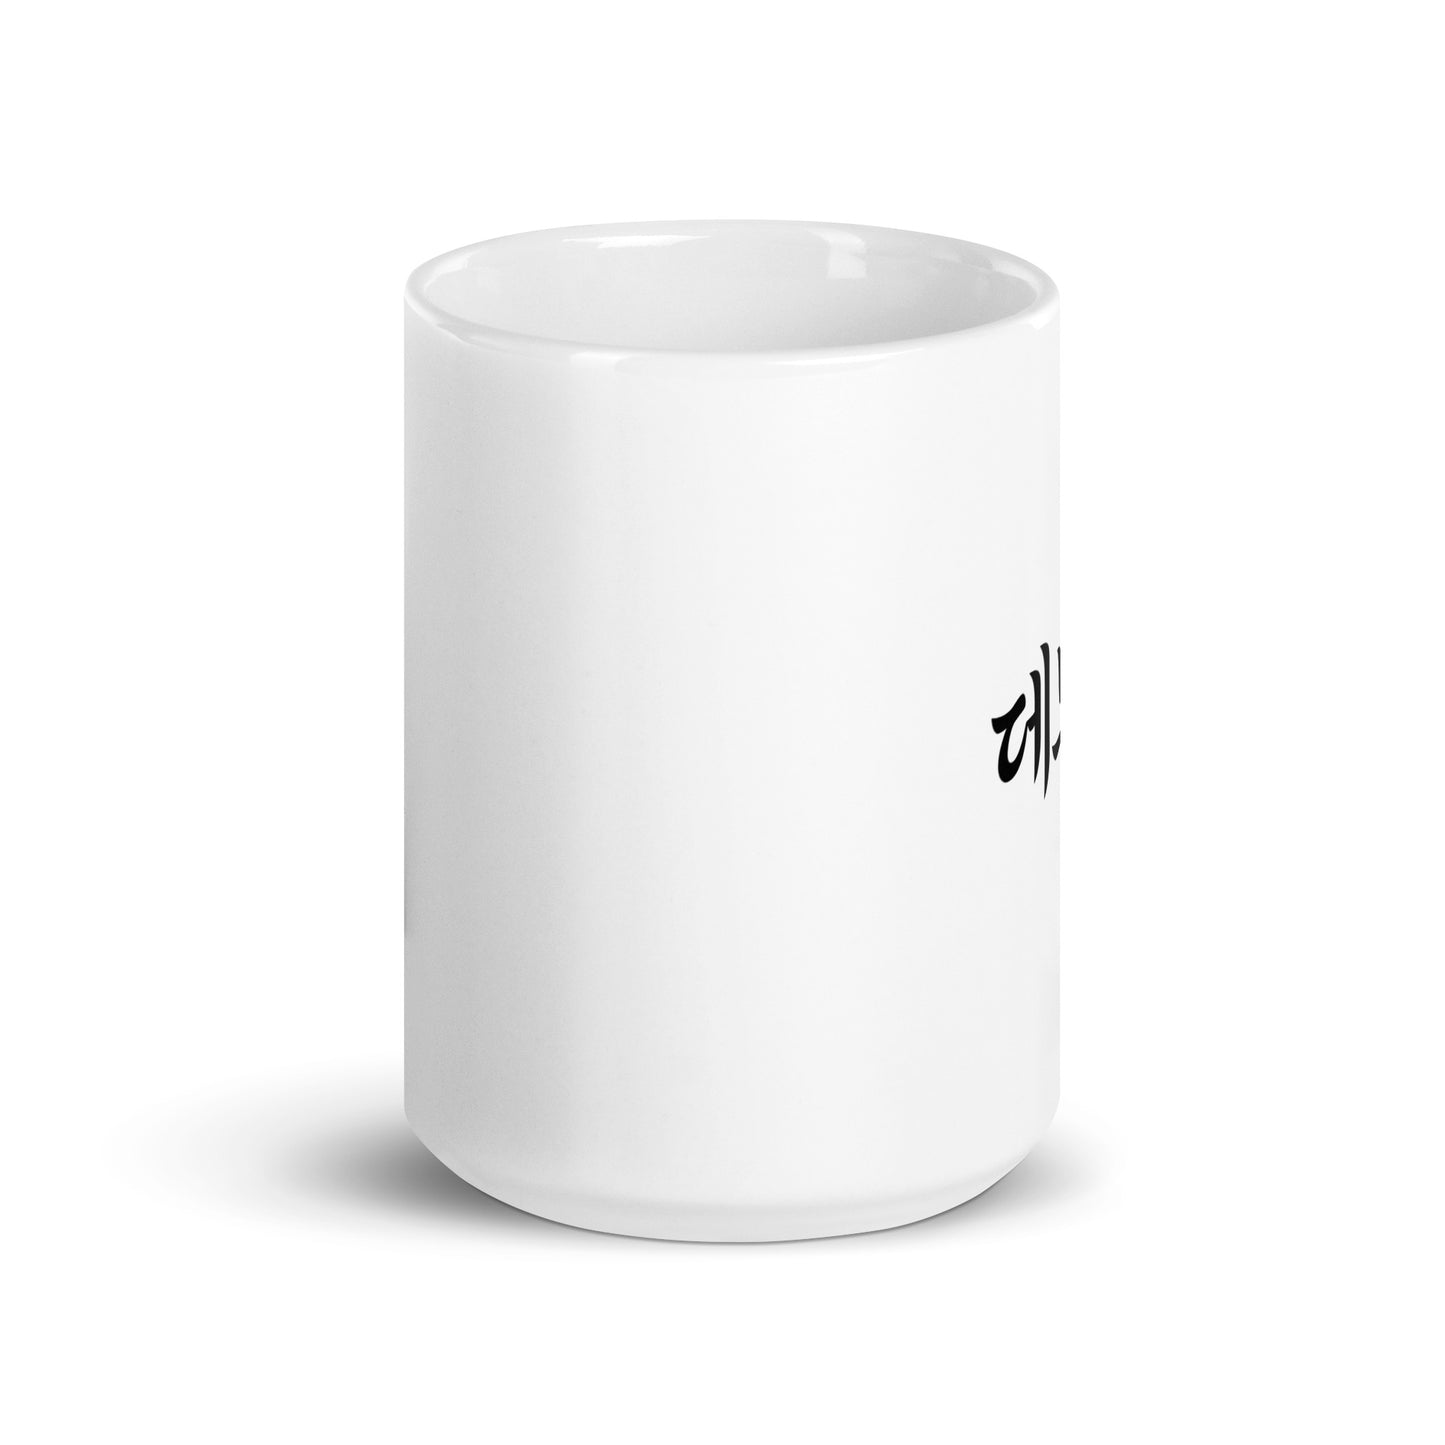 Debra in Hangul Custom Name Gift Ceramic Mug